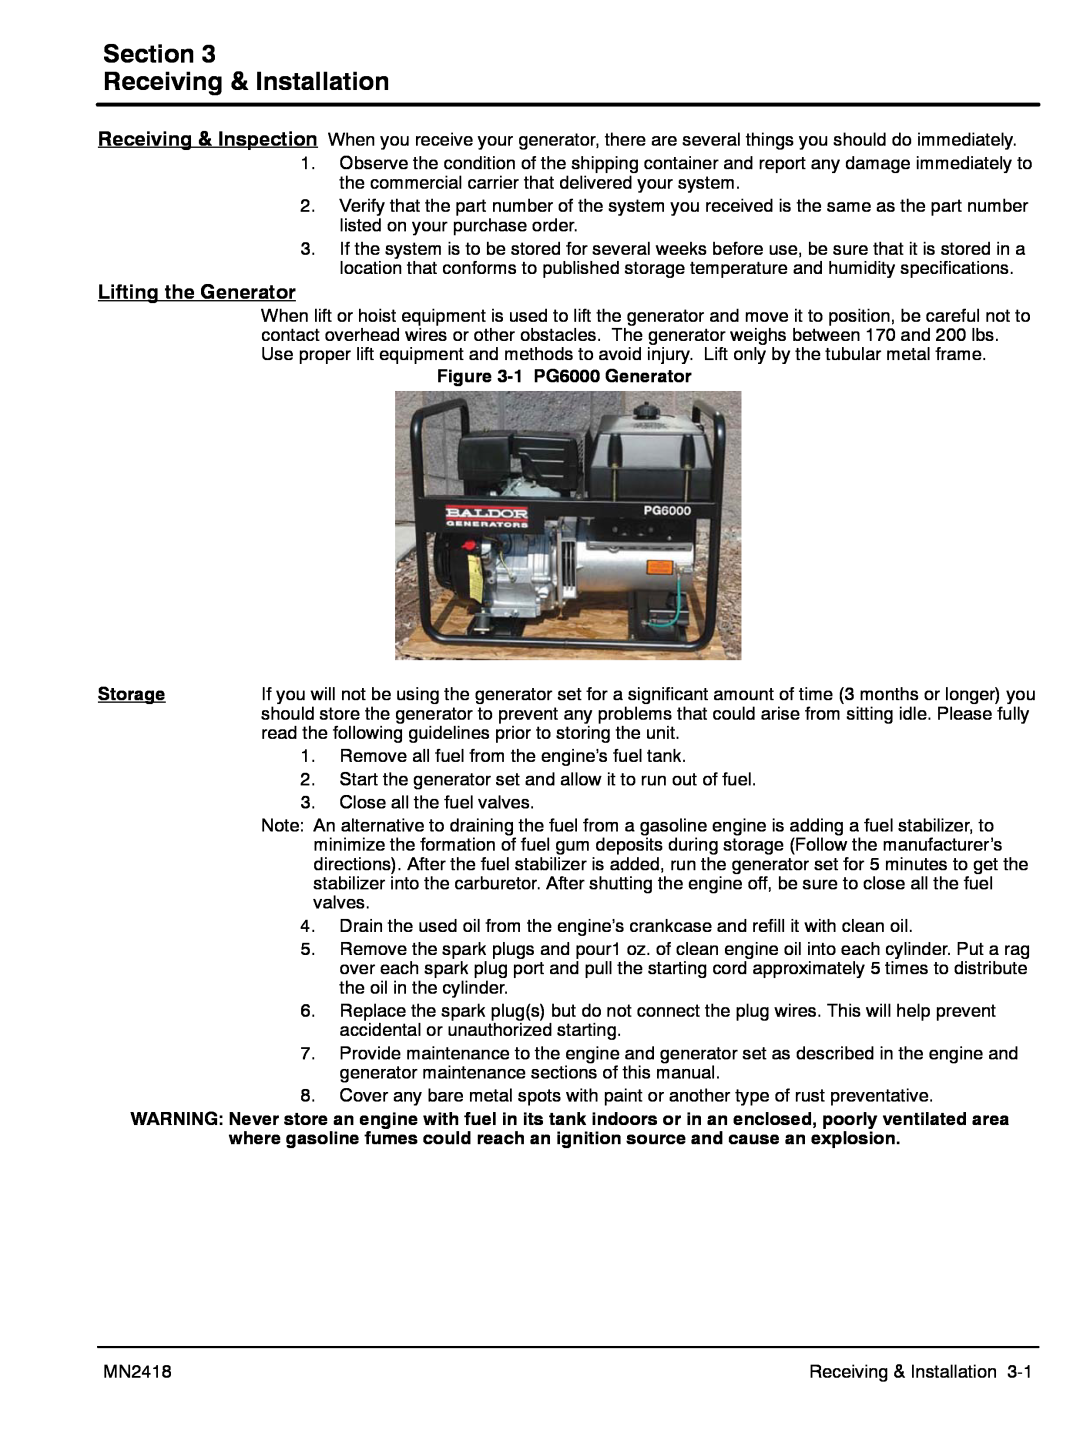 Baldor PG 6000 manual Section Receiving & Installation, Lifting the Generator 